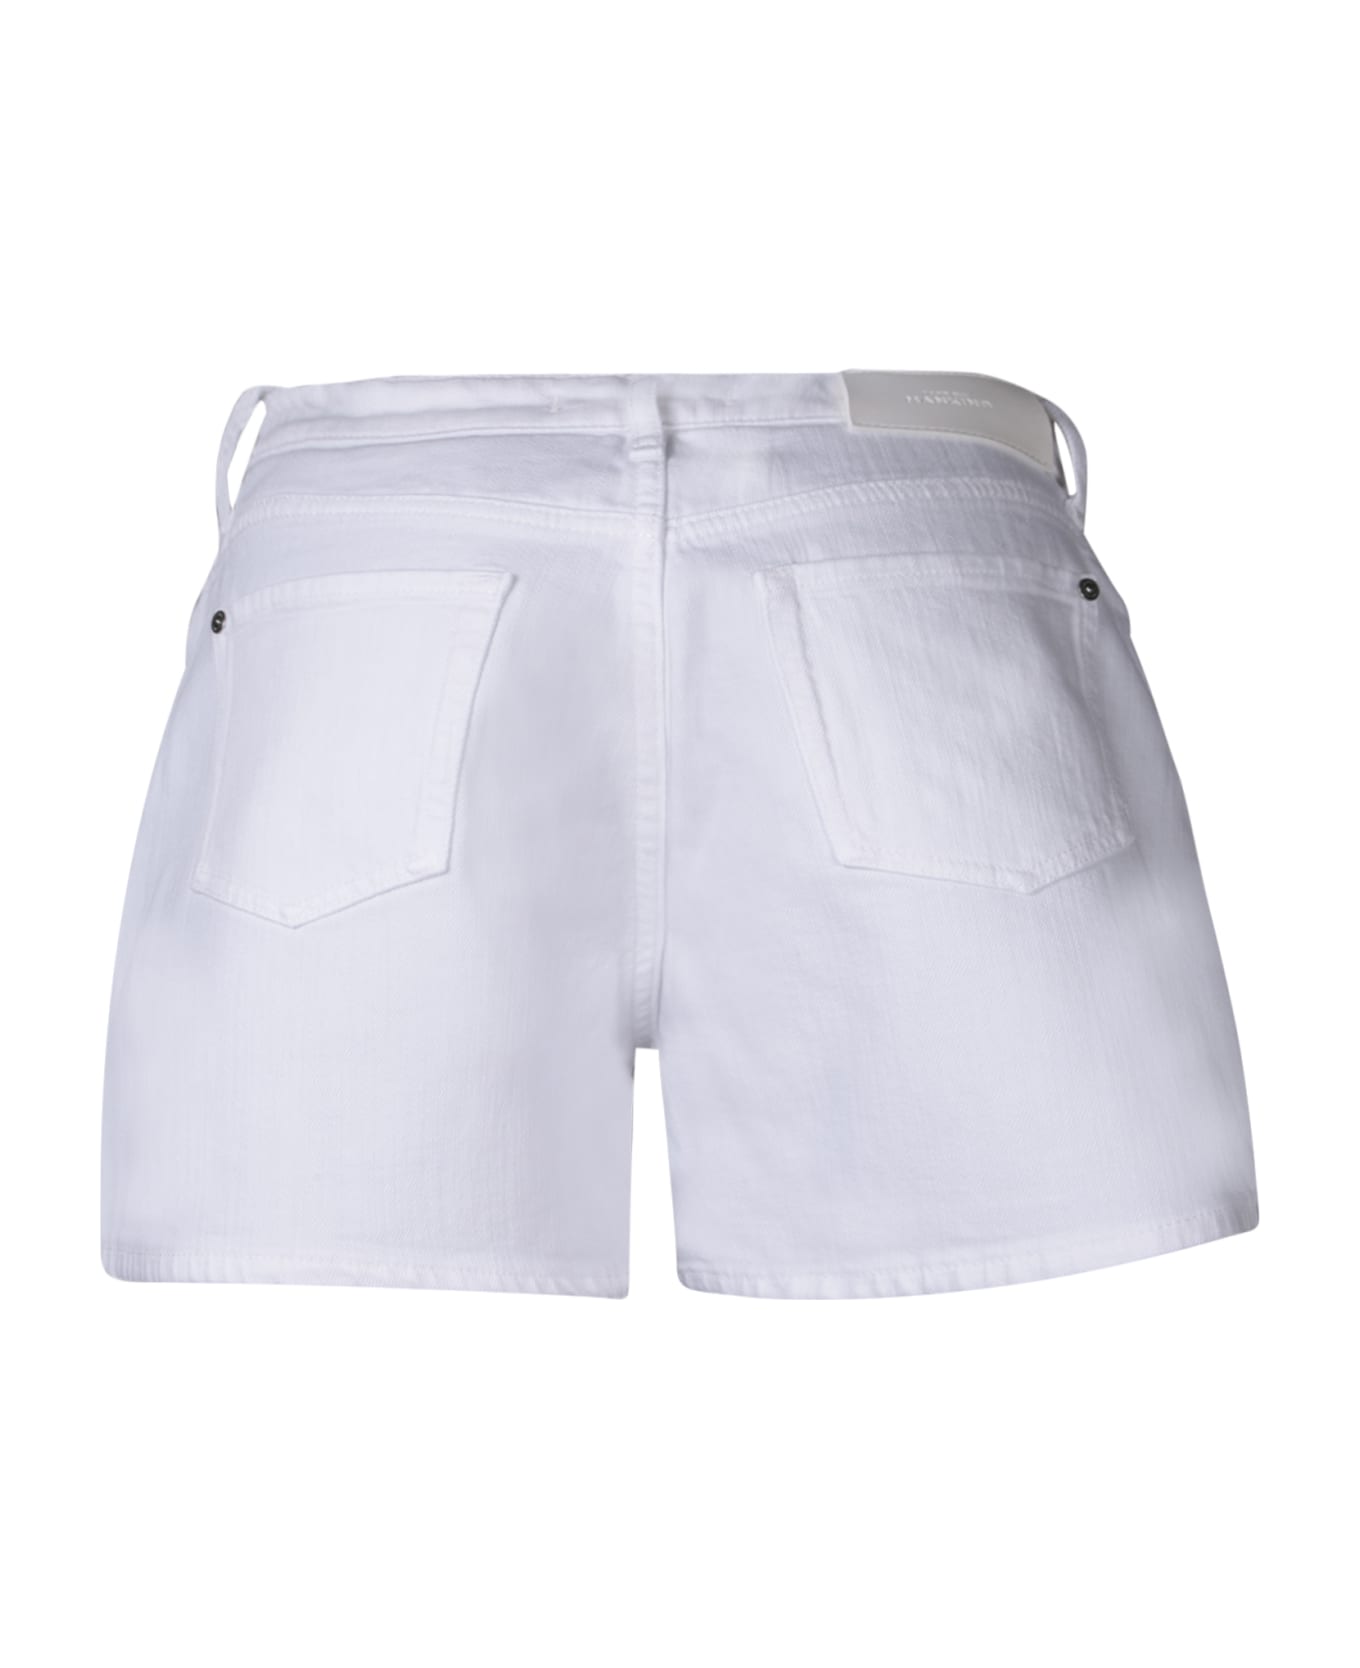 7 For All Mankind Monroe White Shorts - White